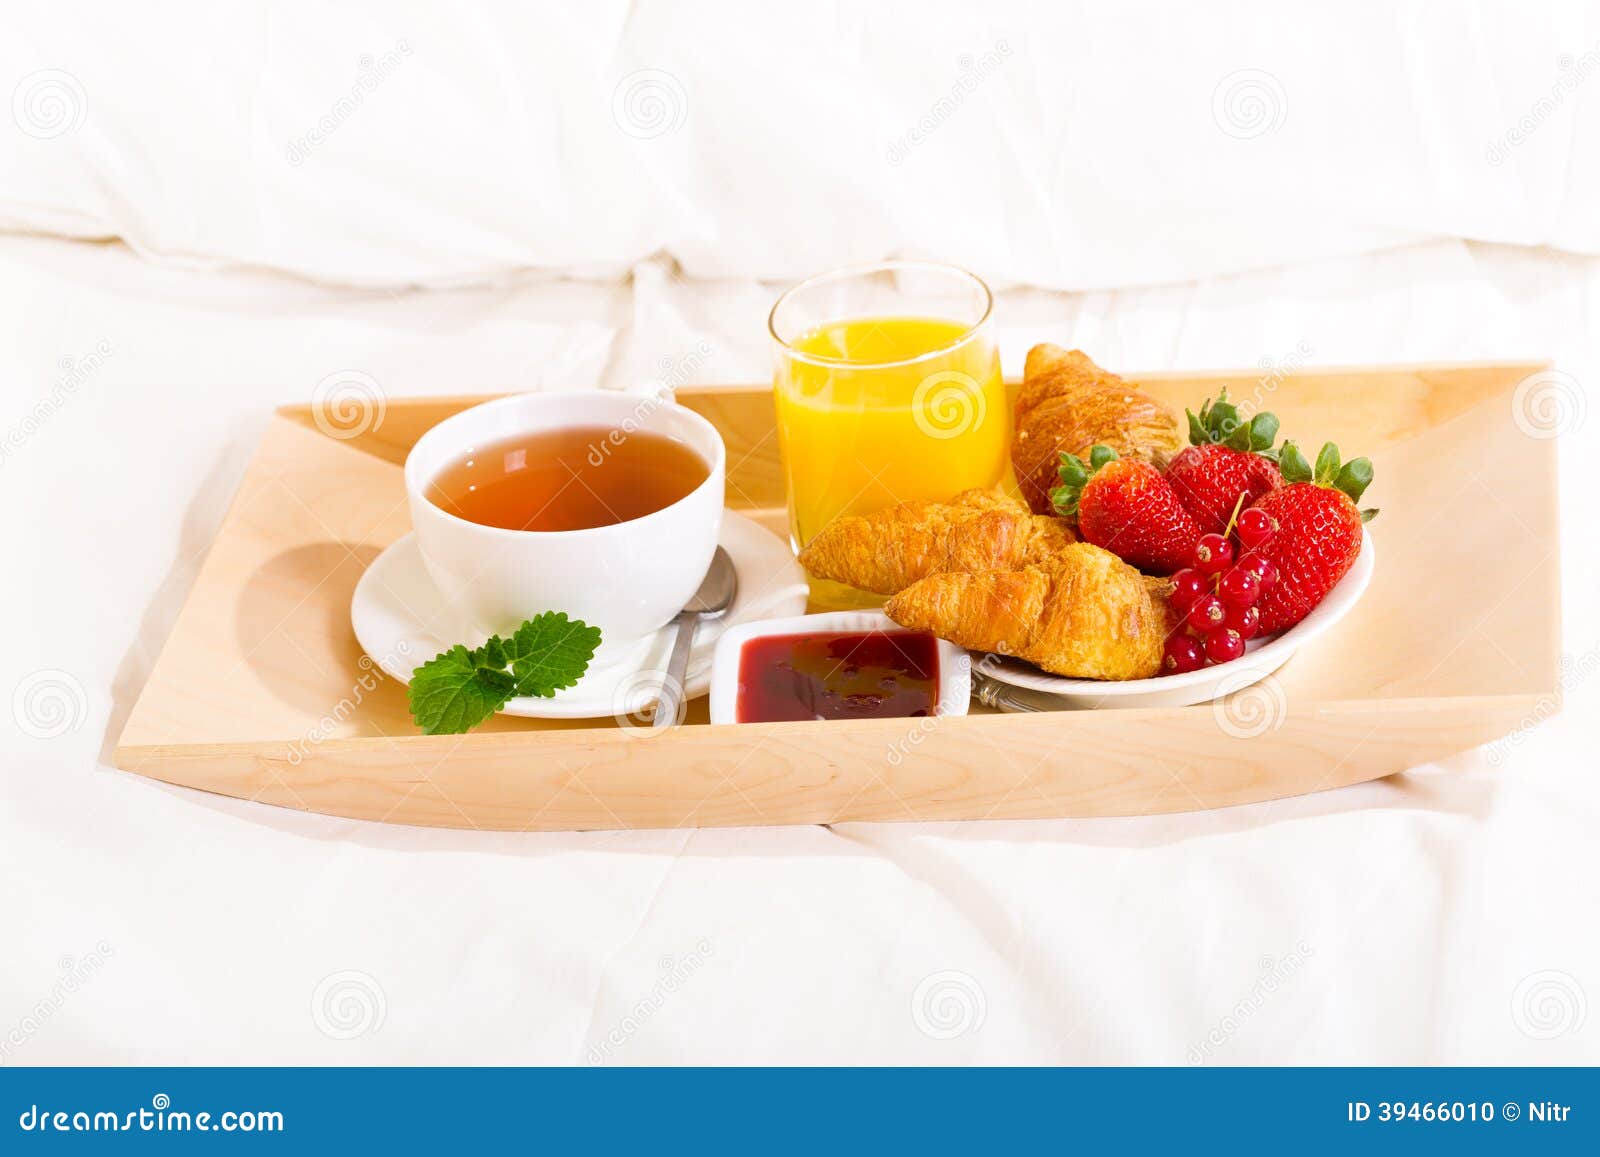 breakfast-bed-tea-croissants-juice-39466010.jpg